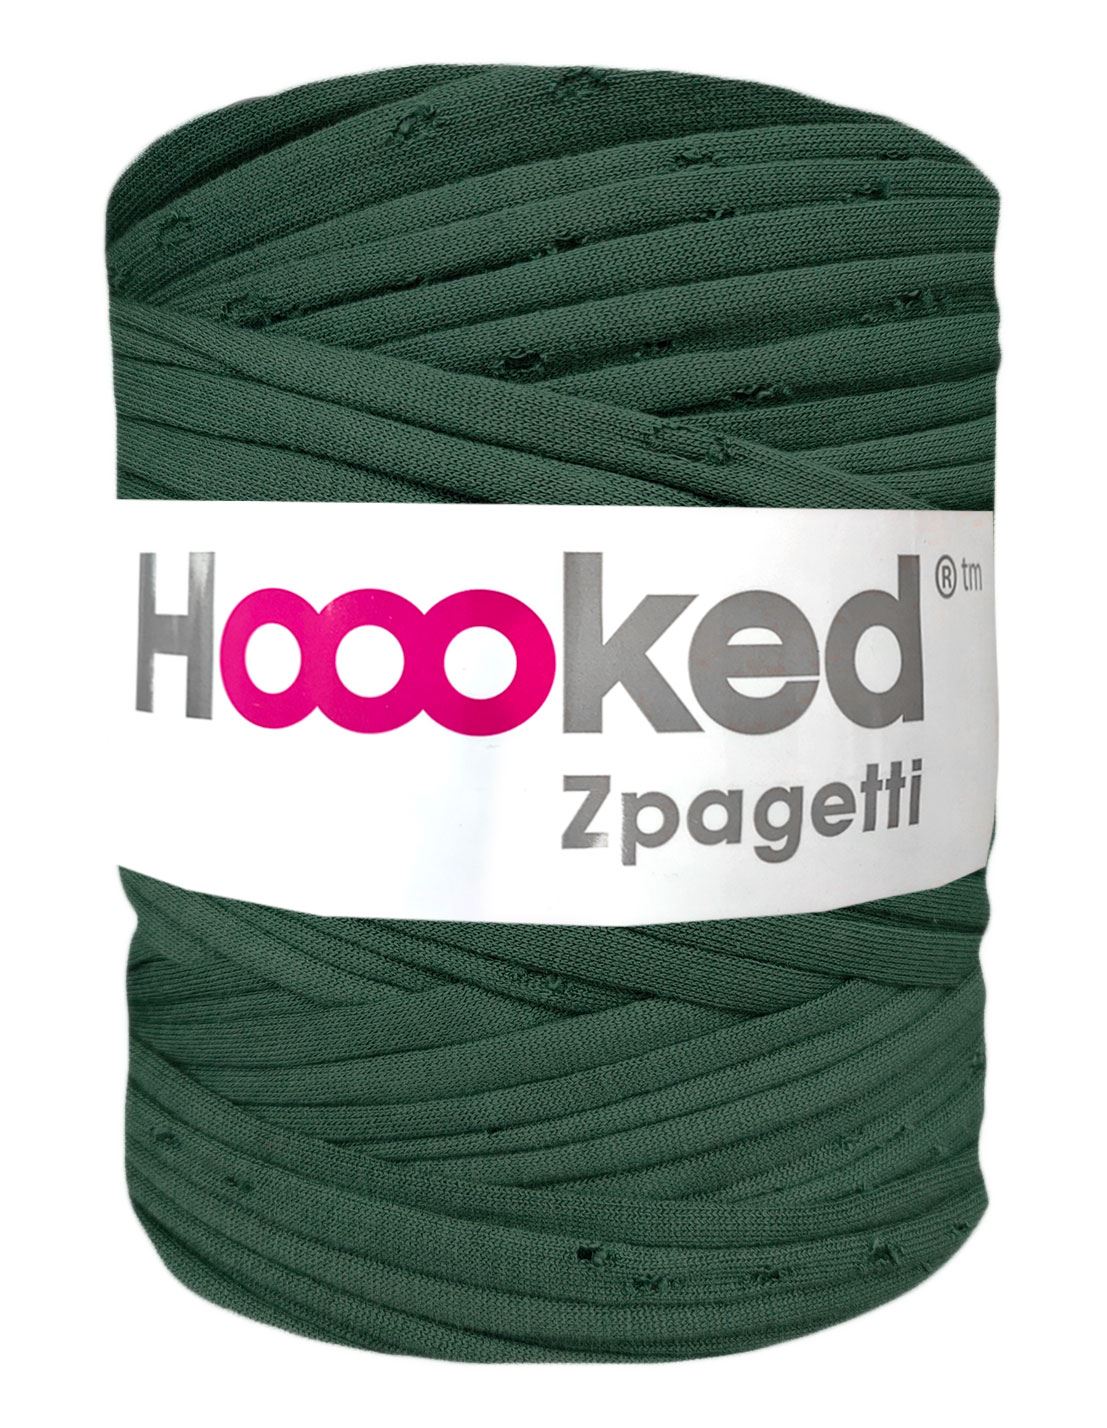 Pale basil green t-shirt yarn by Hoooked Zpagetti (100-120m)